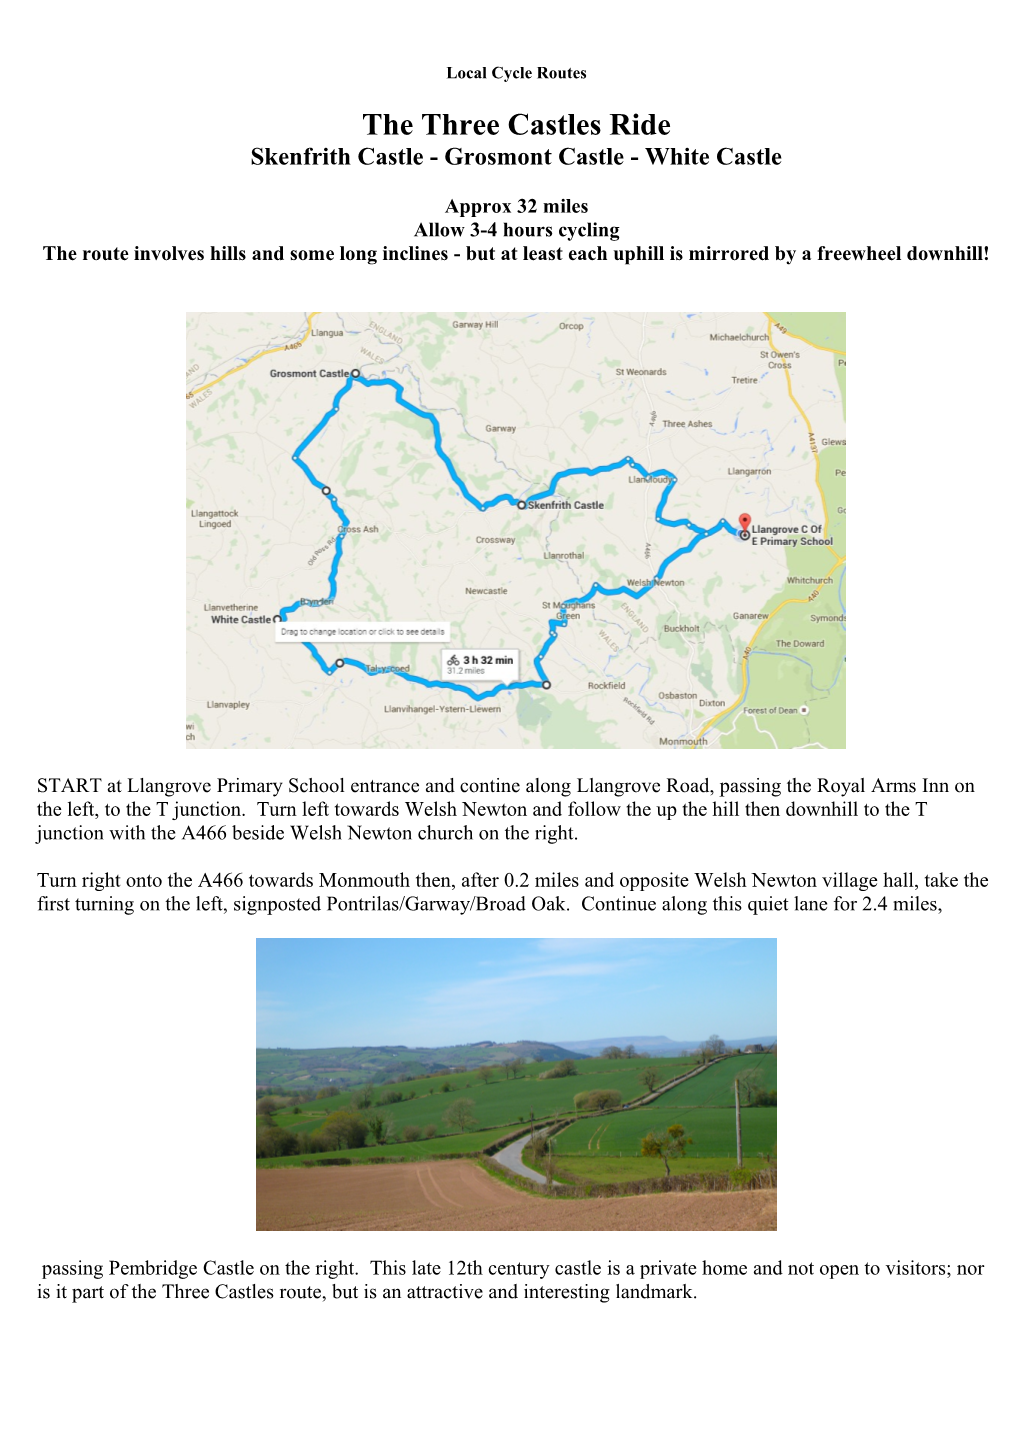 Local Cycle Routes the Three Castles Ride Skenfrith Castle - Grosmont Castle - White Castle